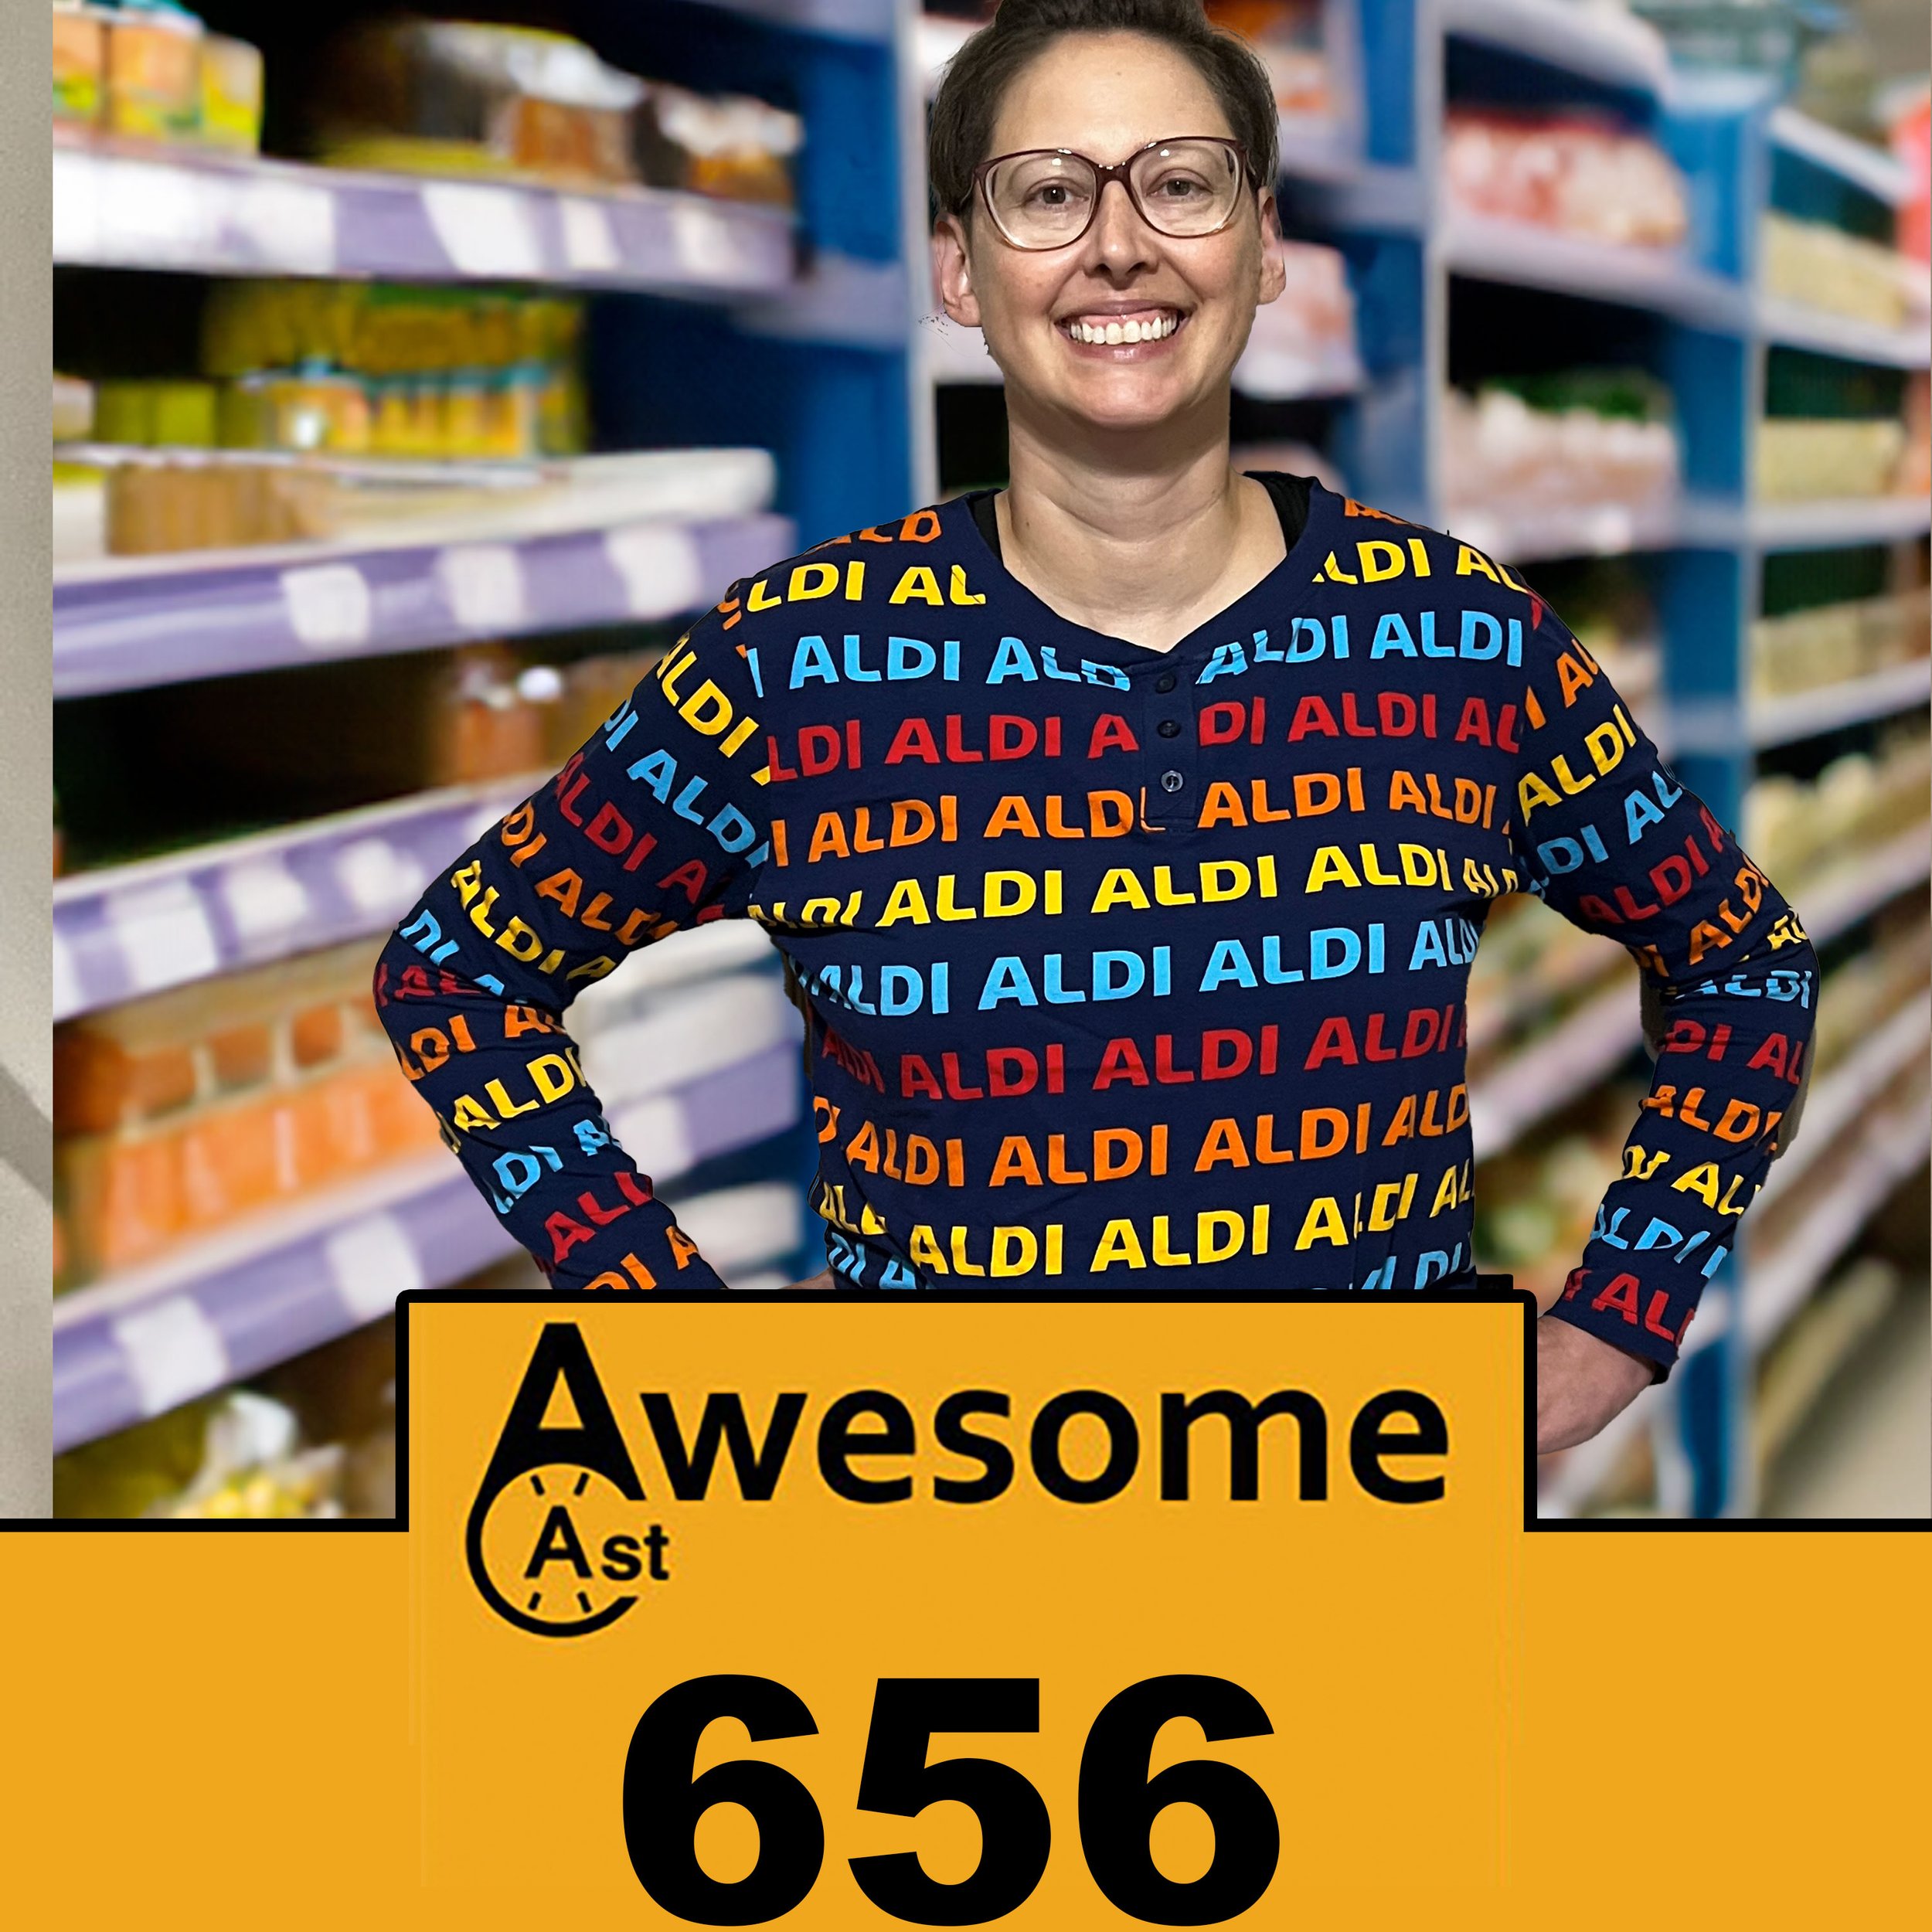 Awesomecast 656: Looking Fly in My Aldi Pajamas — Sorgatron Media